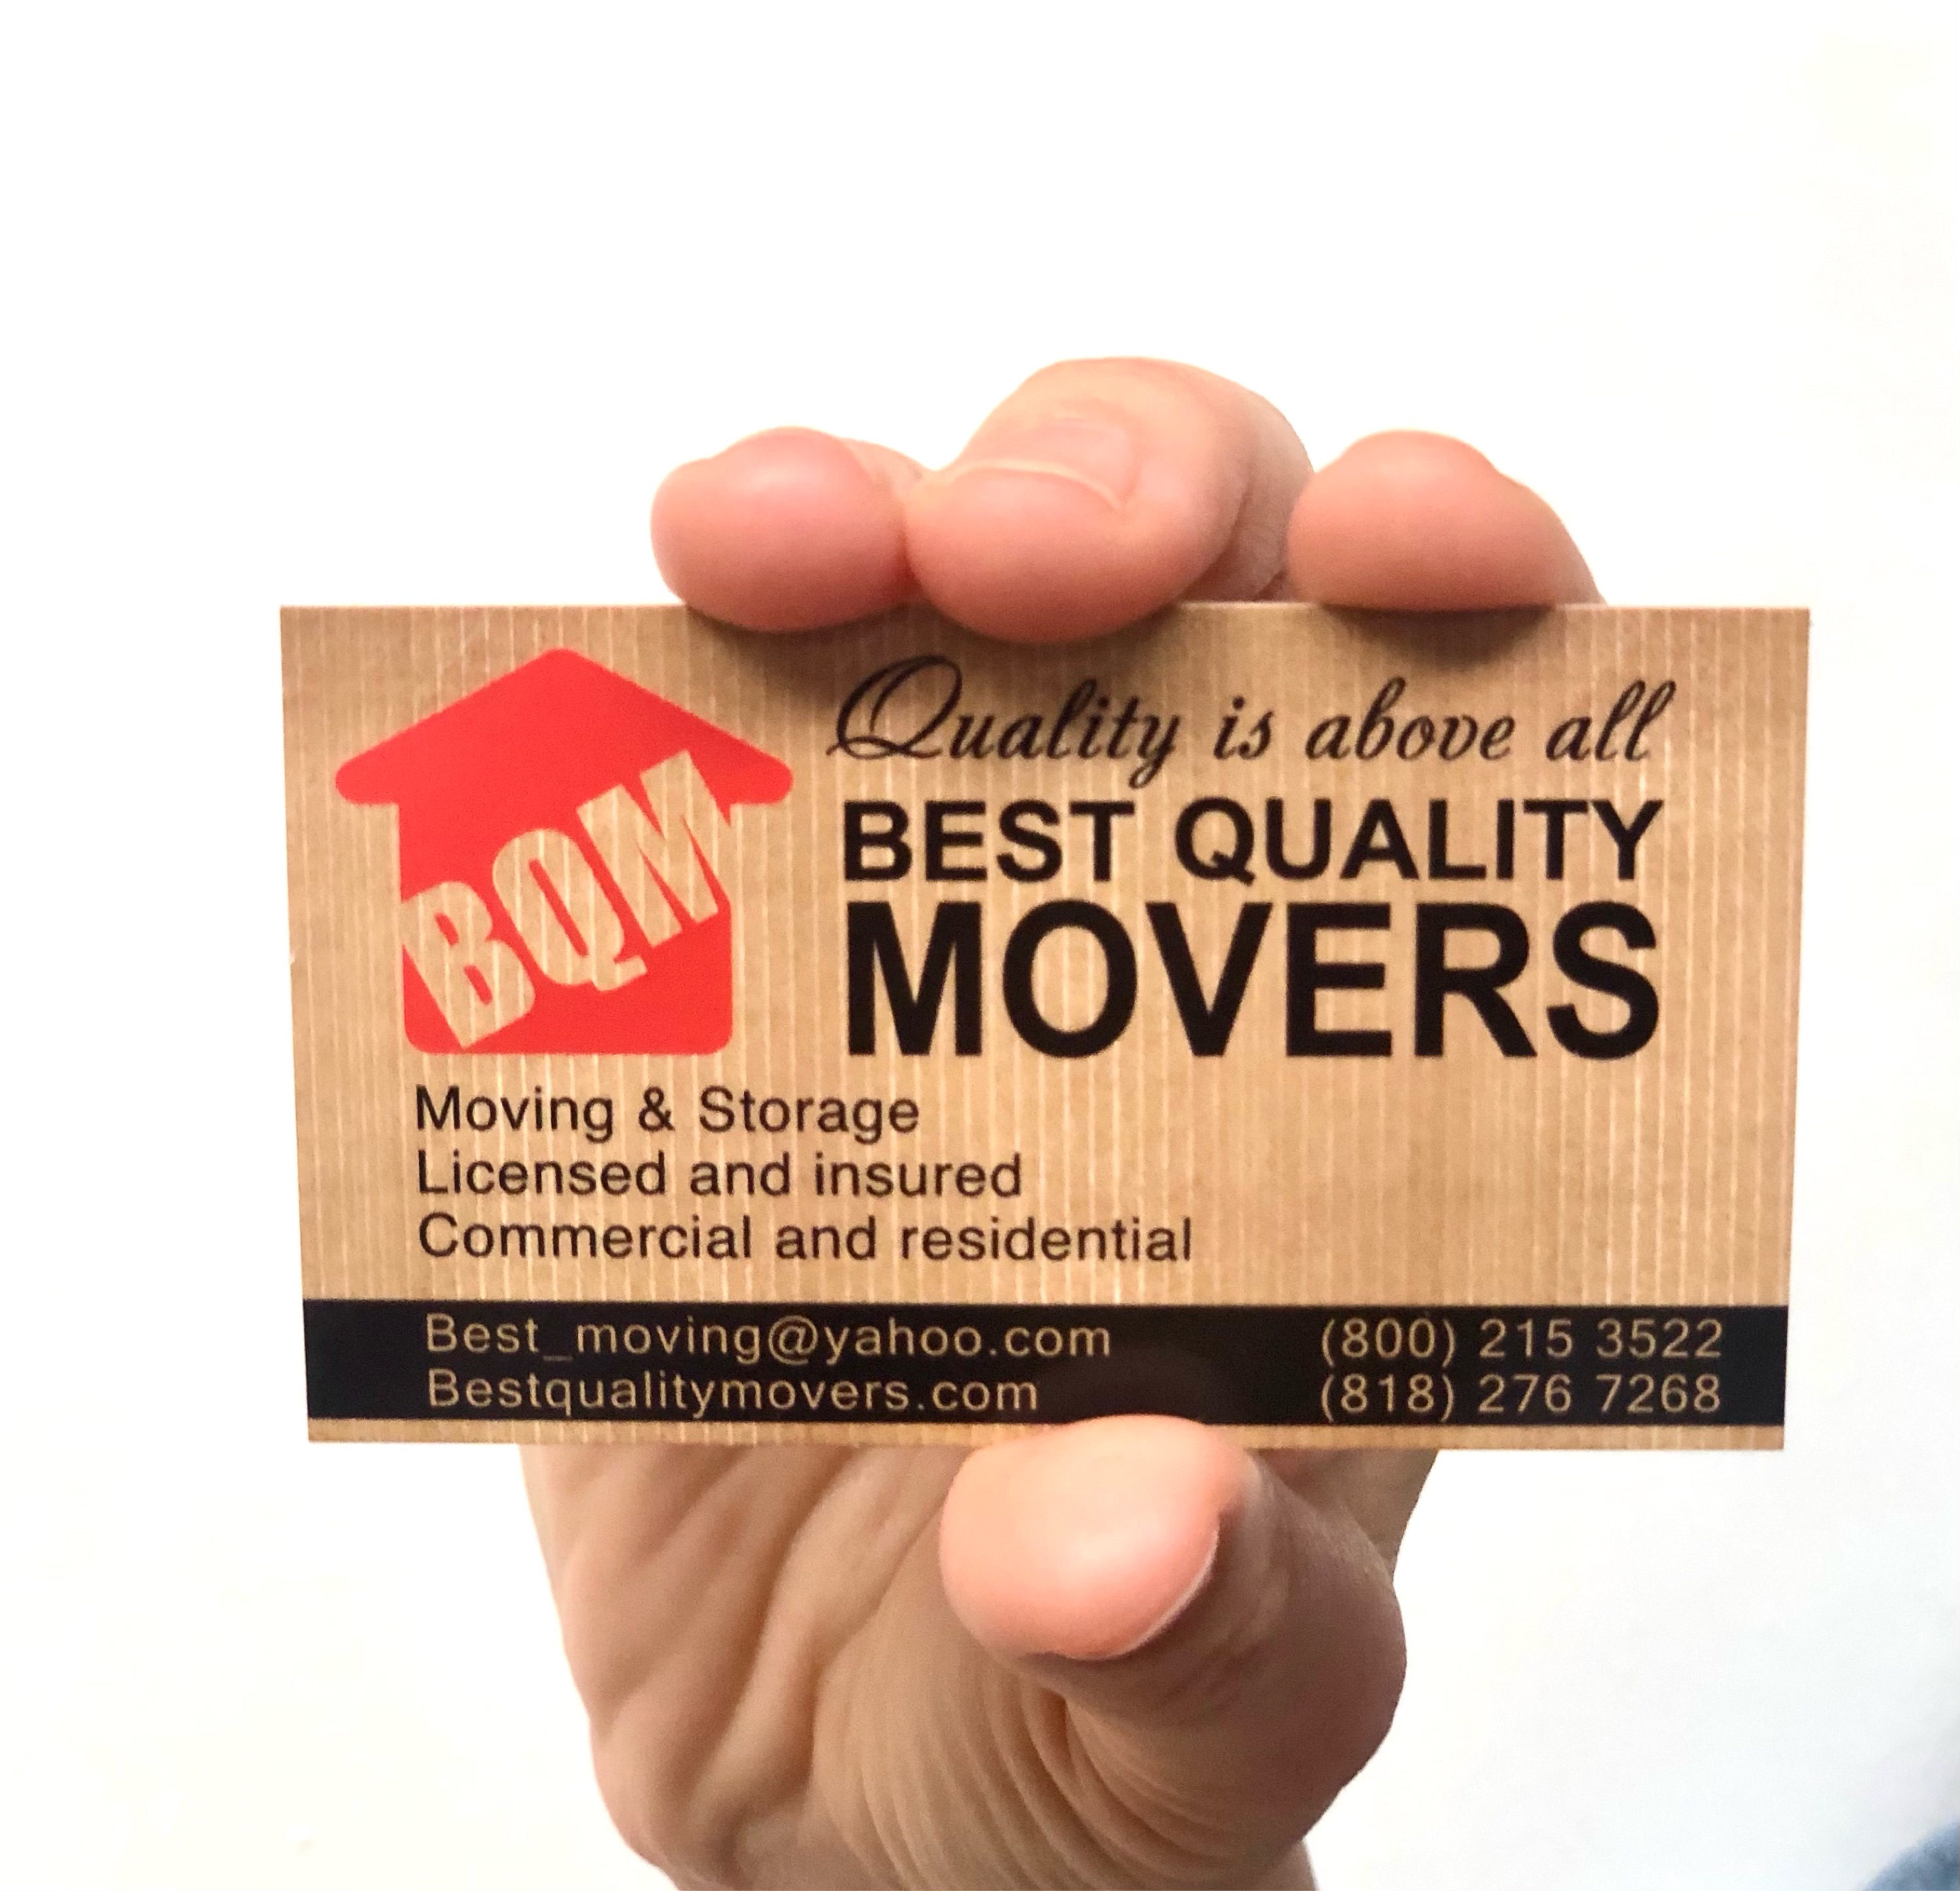 Best Quality Movers, LLC Logo